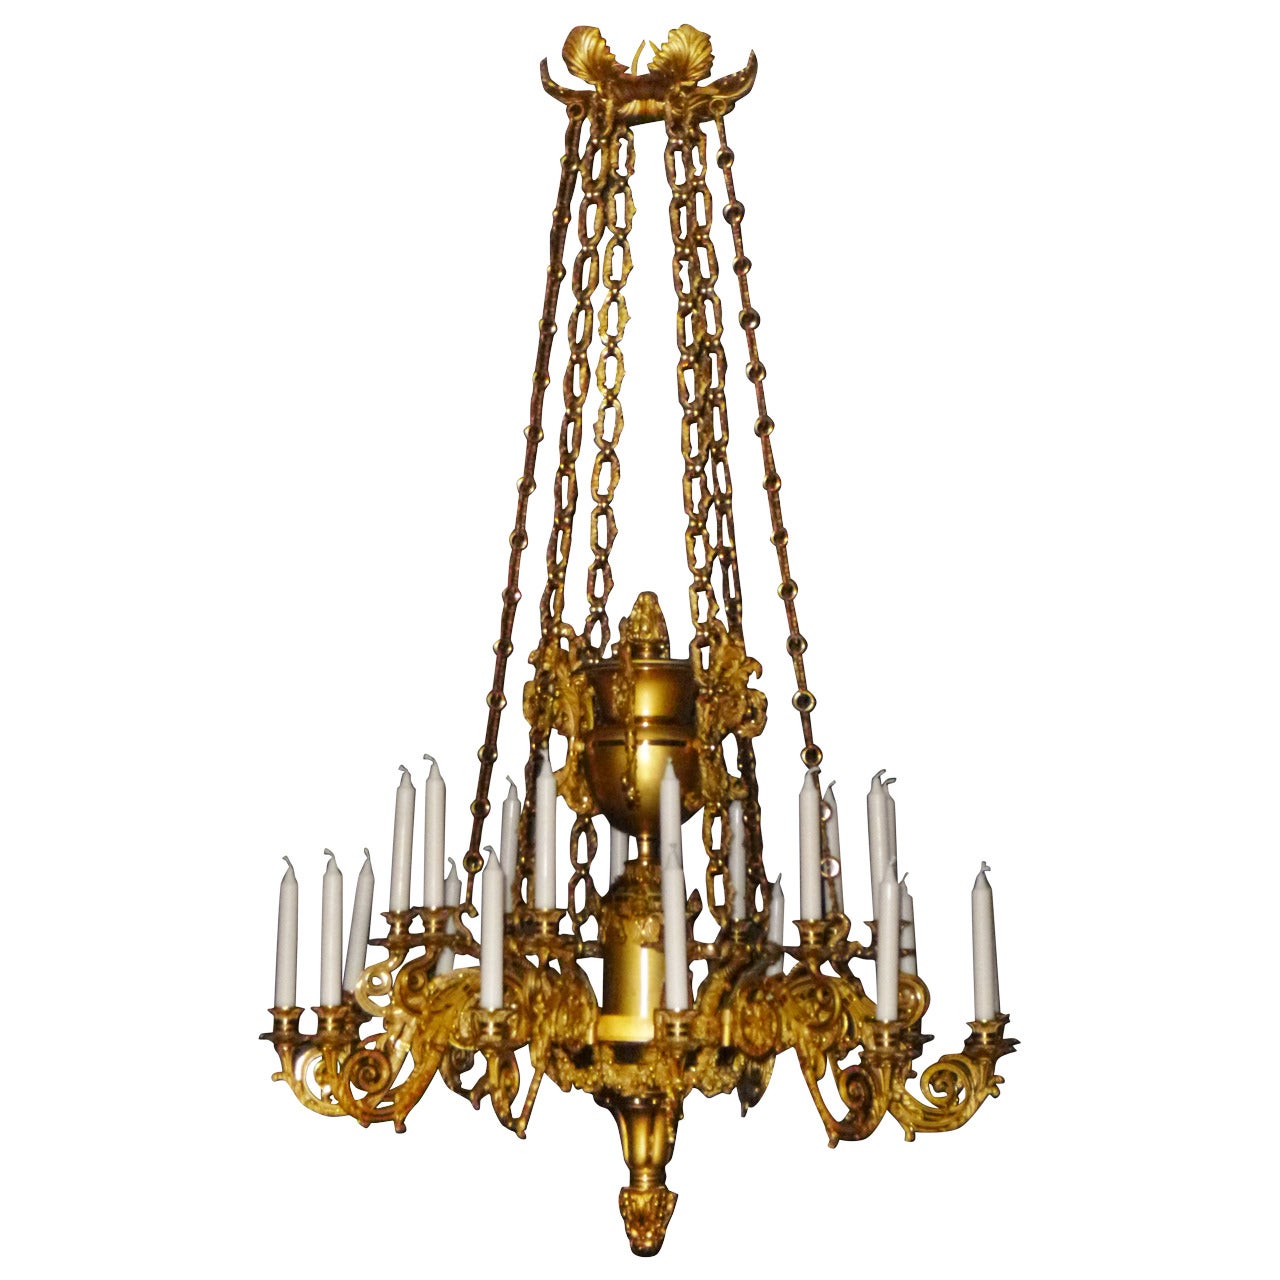 George IV Lacquered Brass Twenty-Four-Light Chandelier, circa 1830